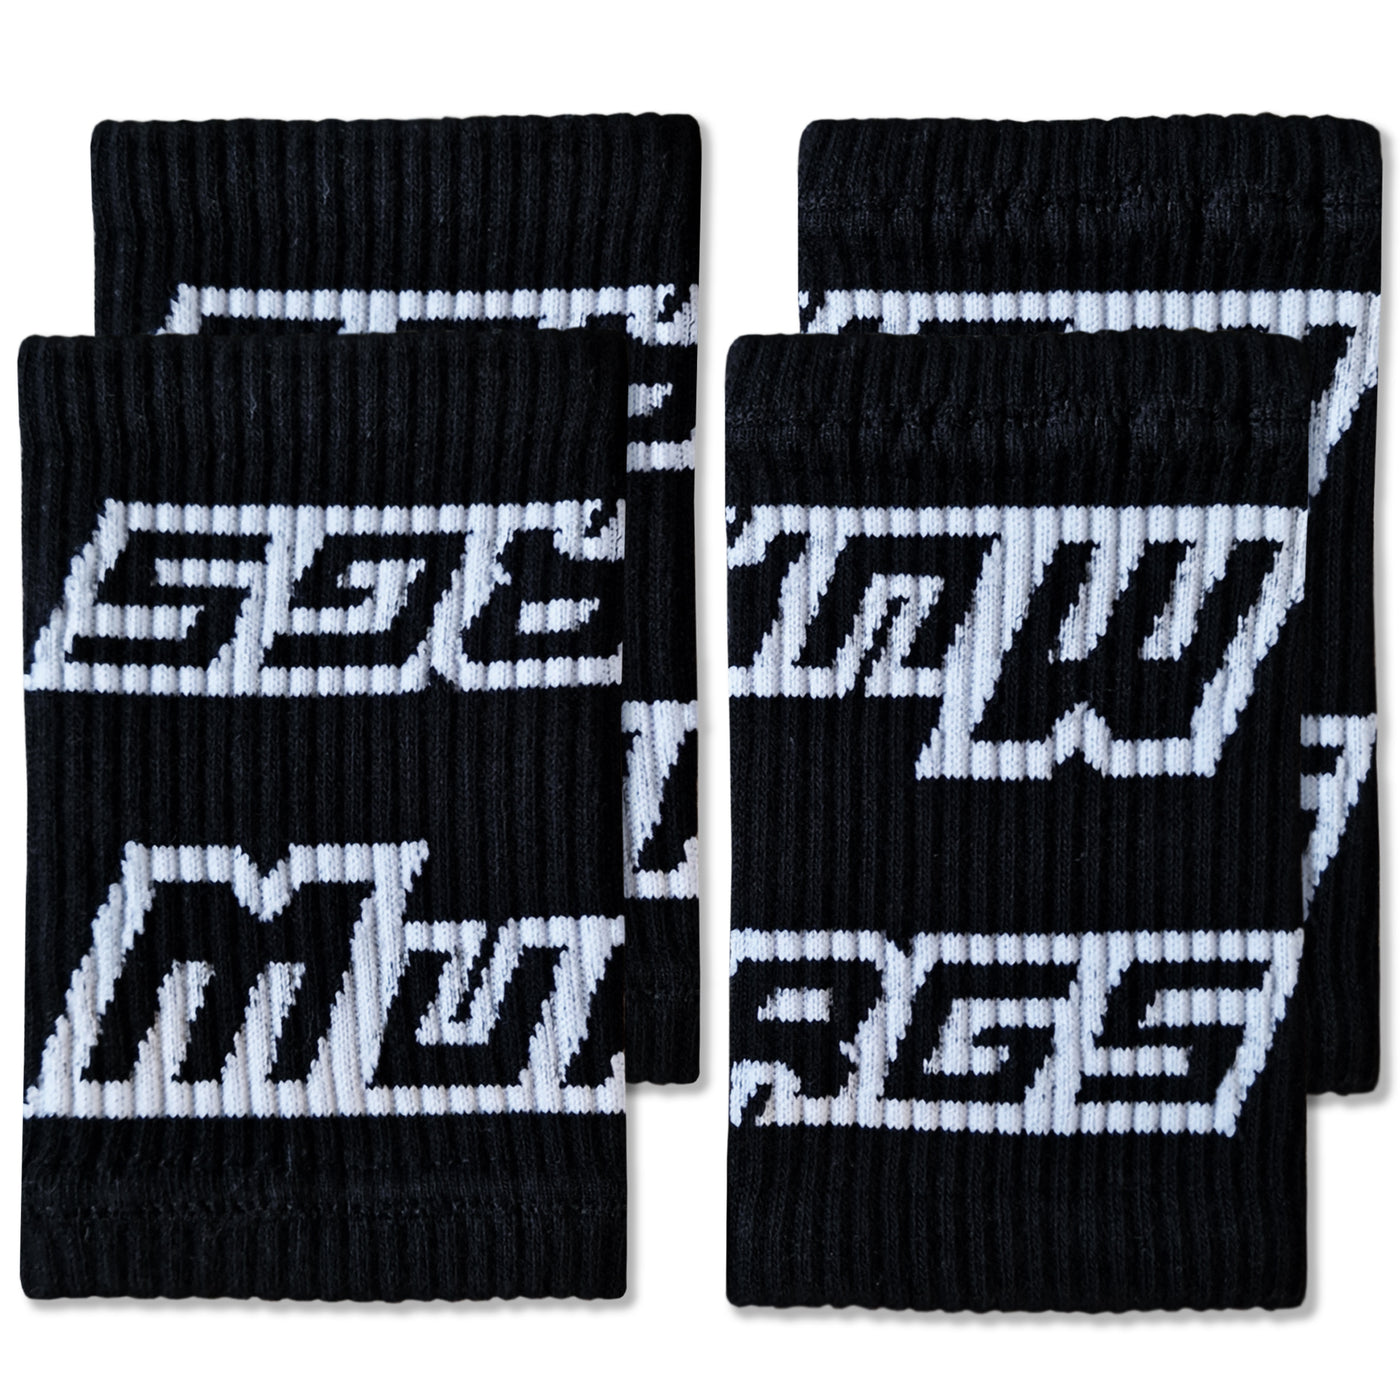 Murgs crossfit wristbands 2 pairs black